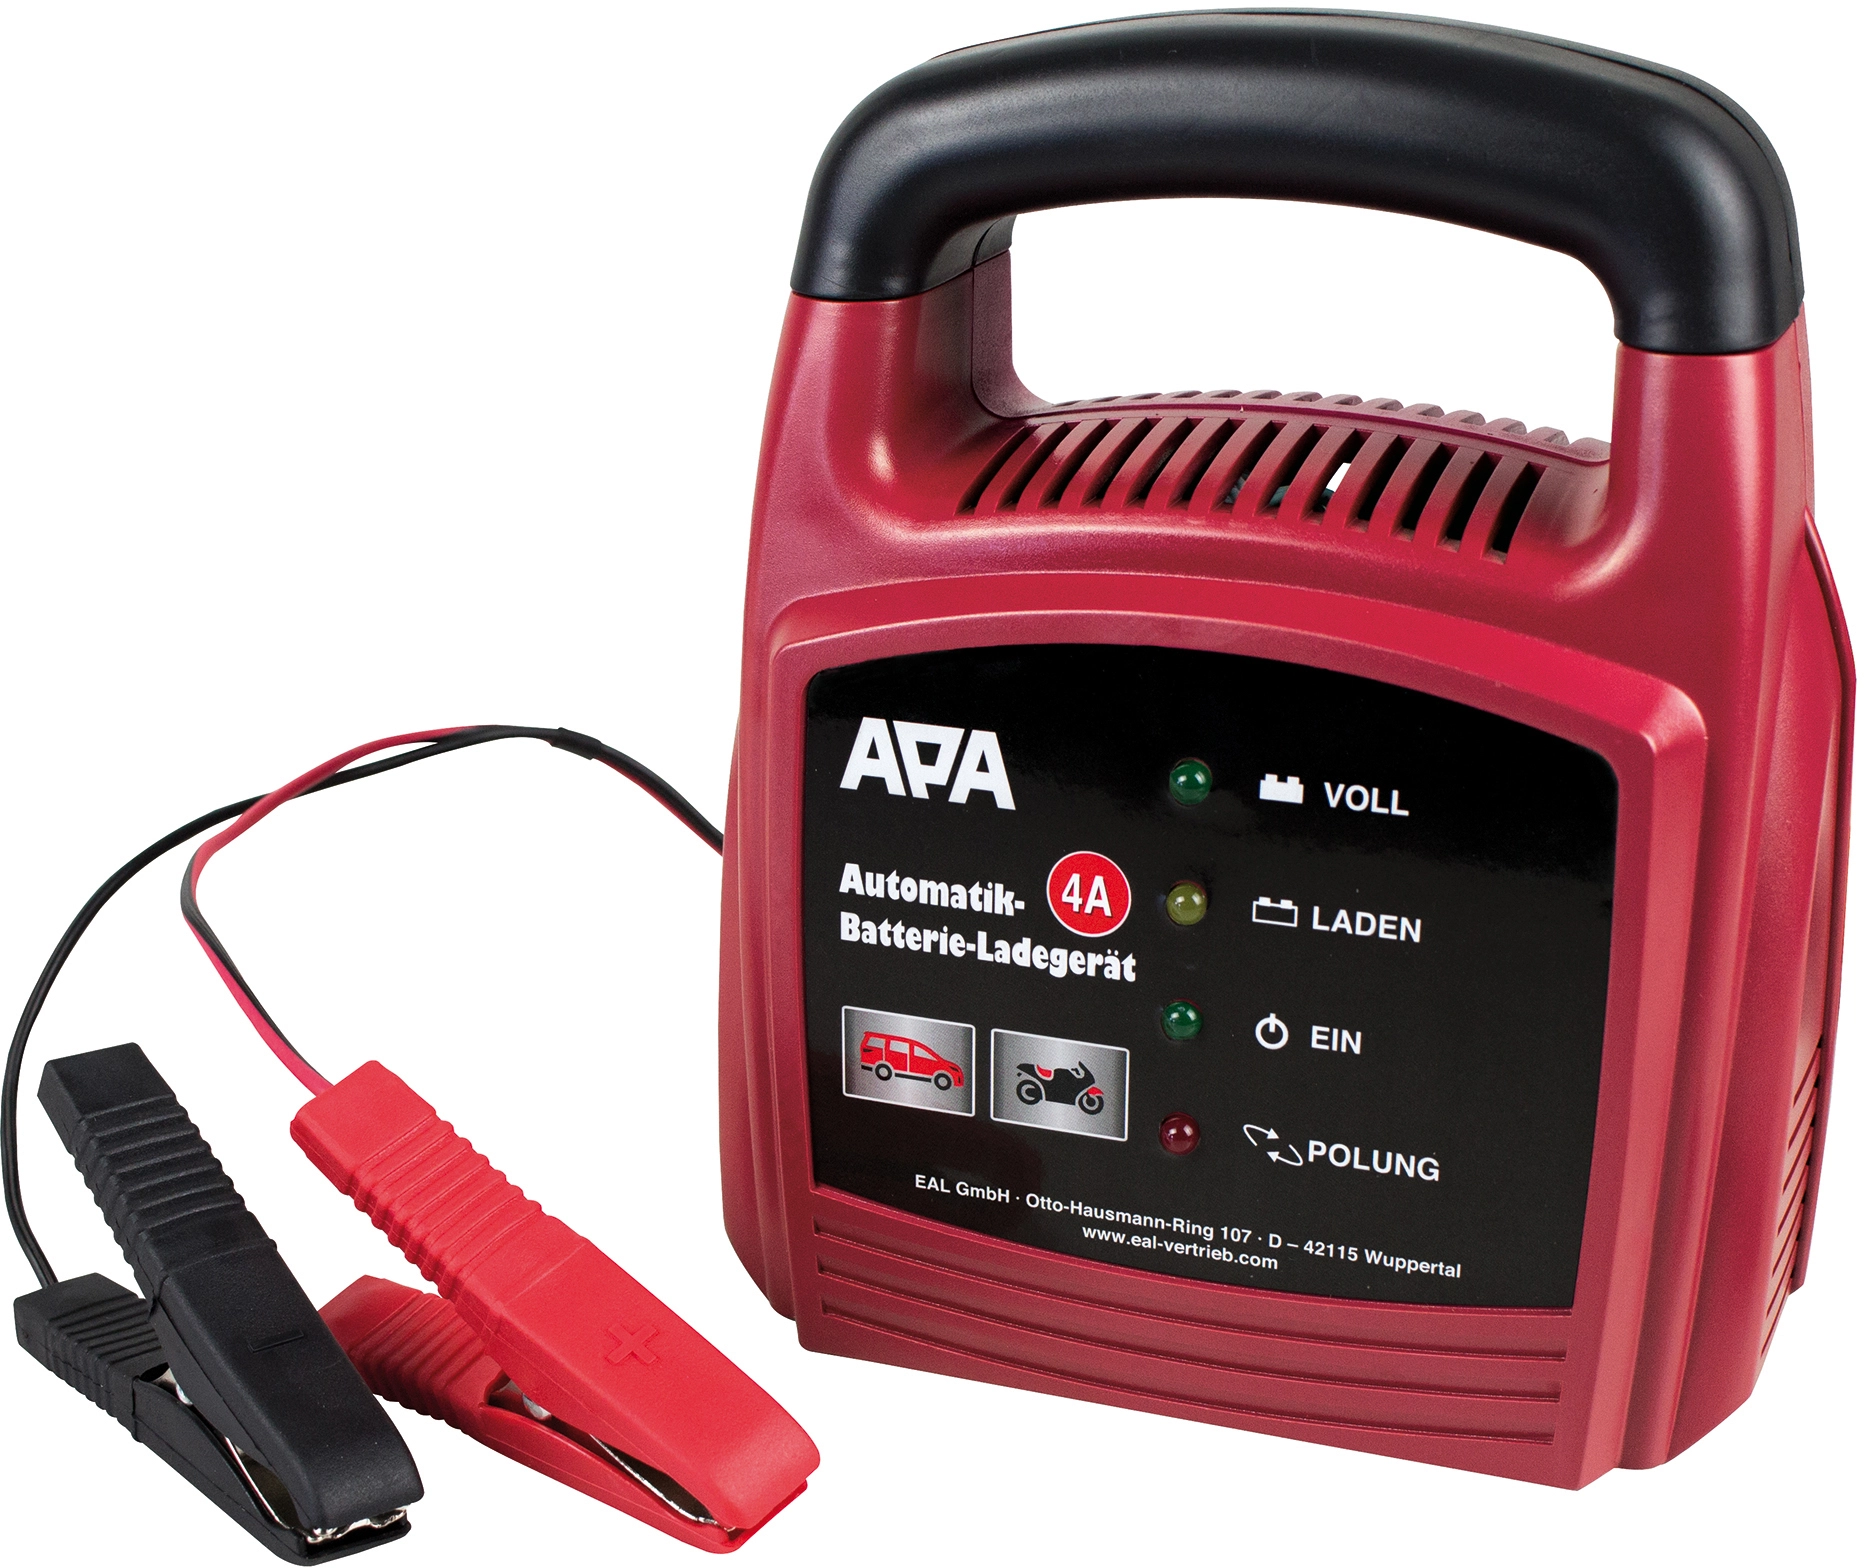 APA Automatik-Batterieladegerät 12 V 4 A kaufen bei OBI